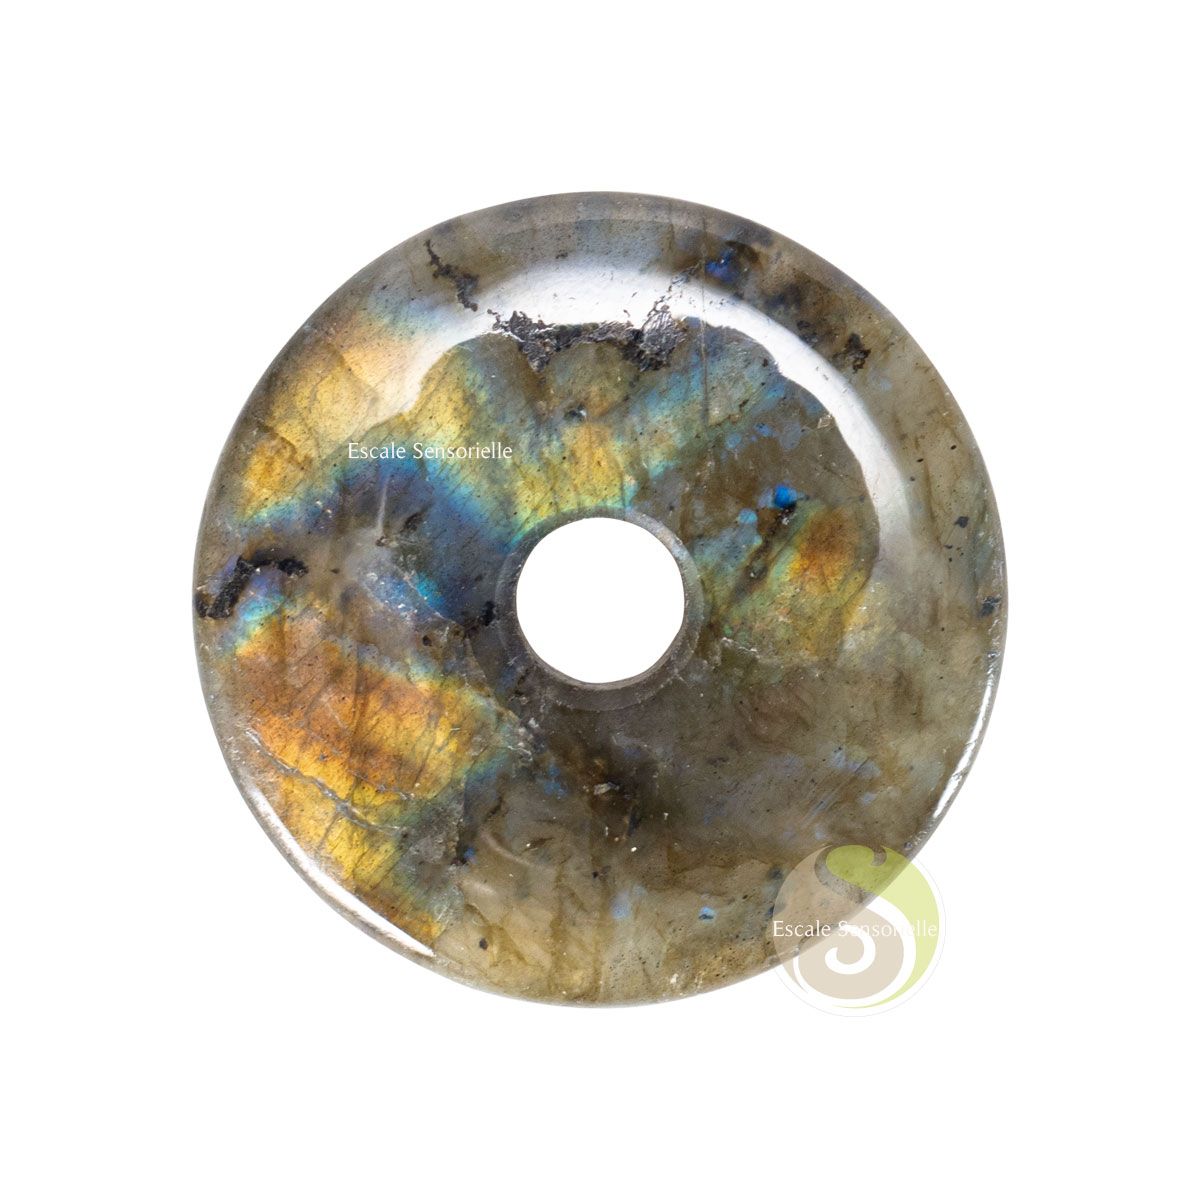 Pendentif labradorite donut 35mm pierre naturelle bijoux pi chinois